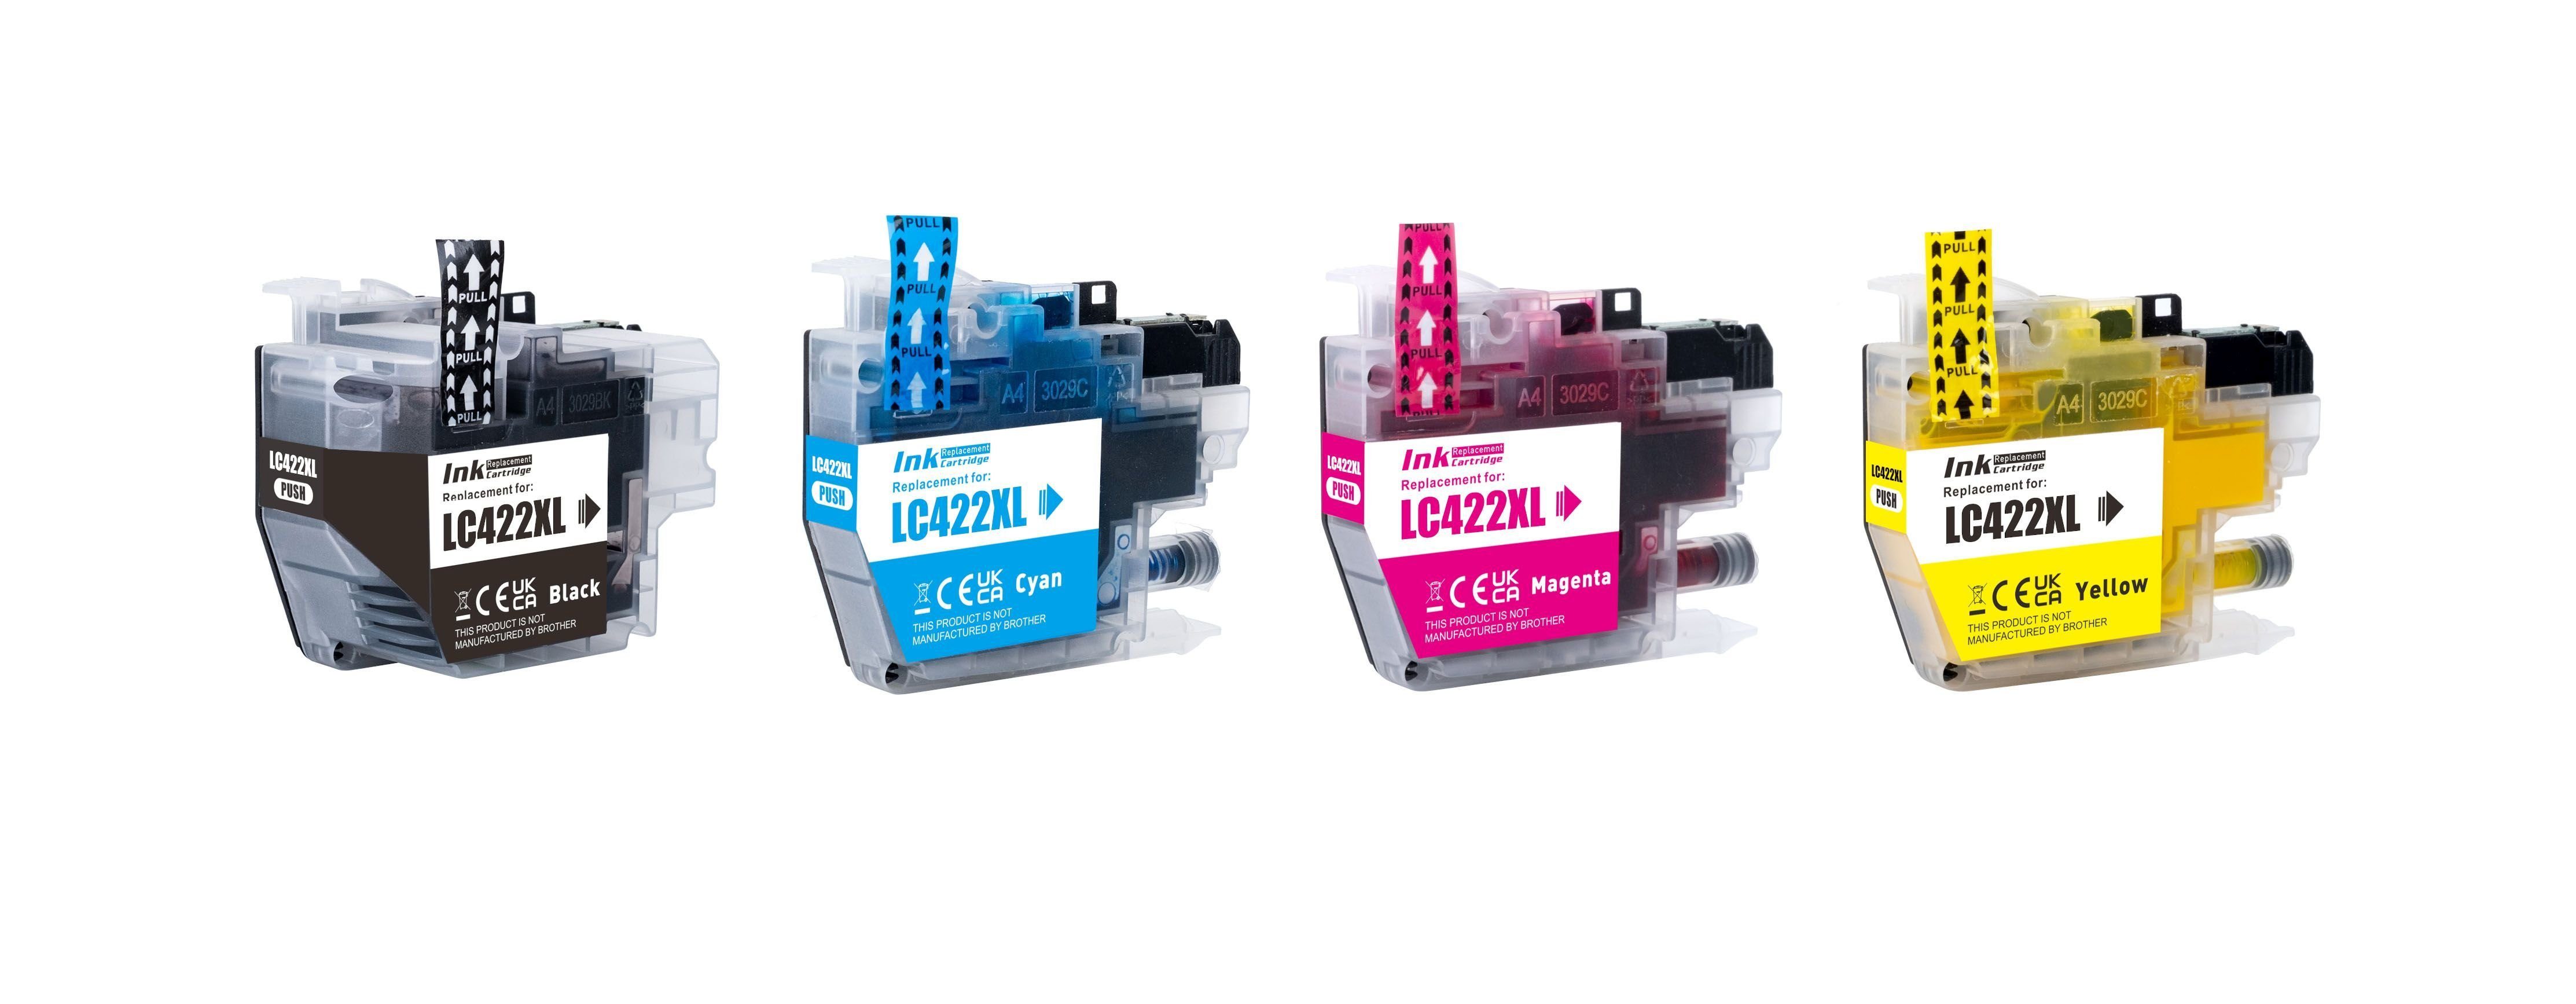 Inbusco Tonerpatrone 4x Tintepatronen kompatibel für Brother LC 422XL ..., SET LC 422 XL | Tonerpatronen